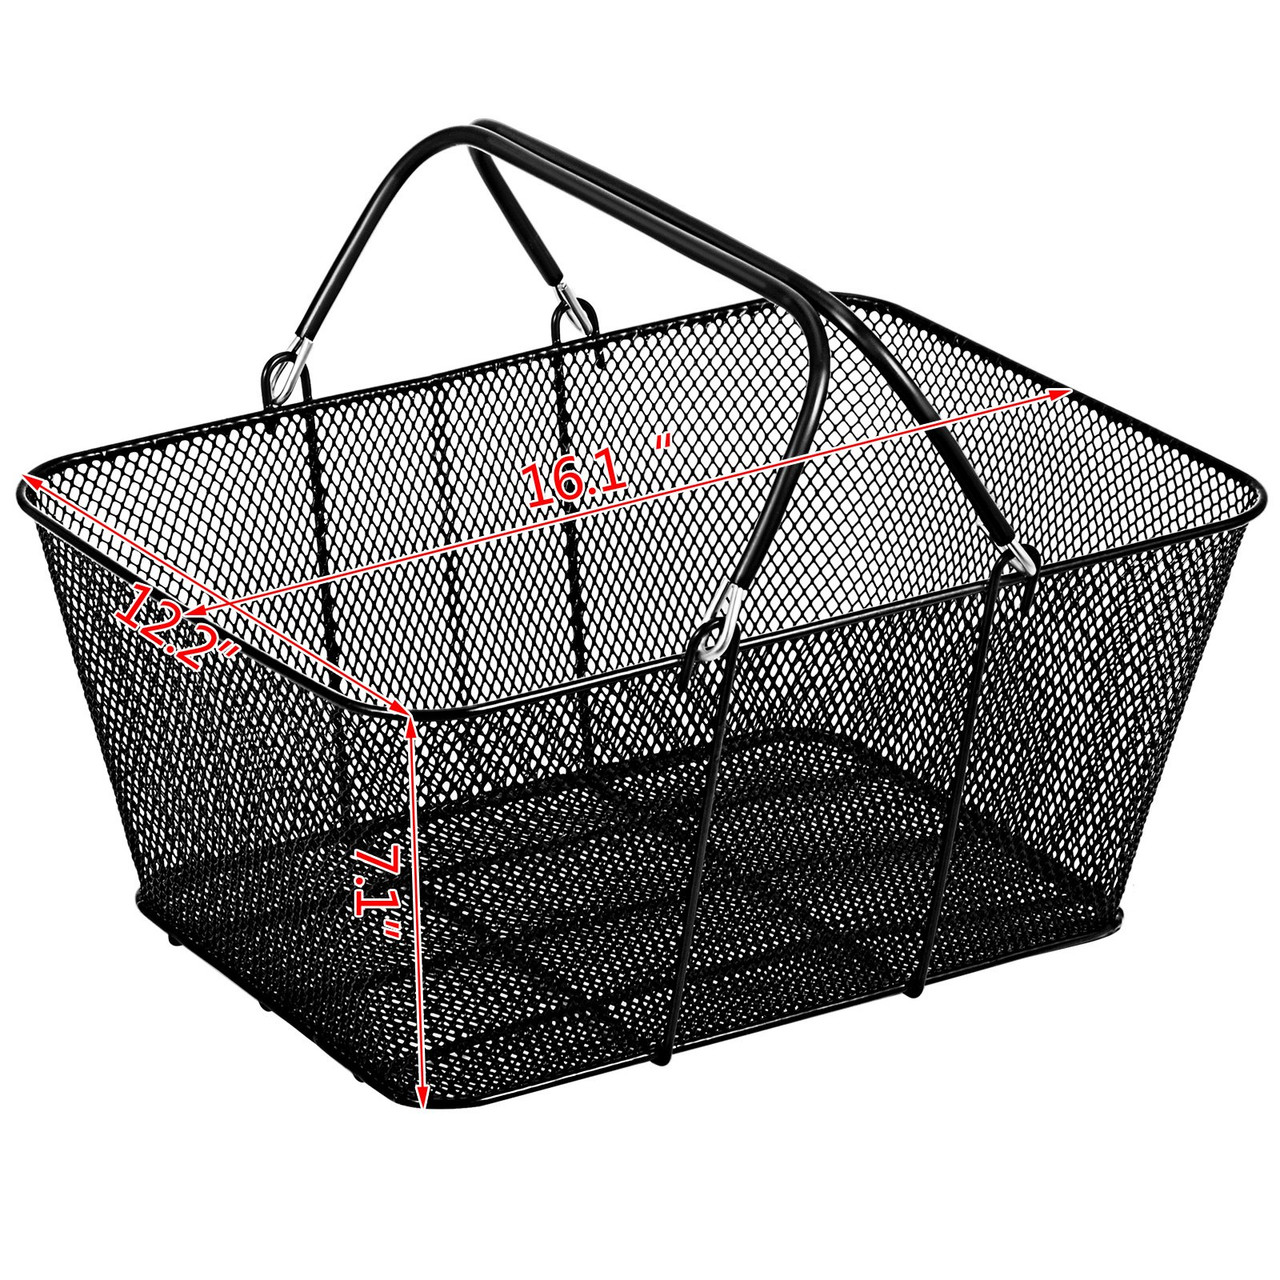 12PCS Shopping Baskets with Handles, Black Metal Shopping Basket, Portable Wire Shopping Basket, Black Wire Mesh shopping Basket Set for Stores